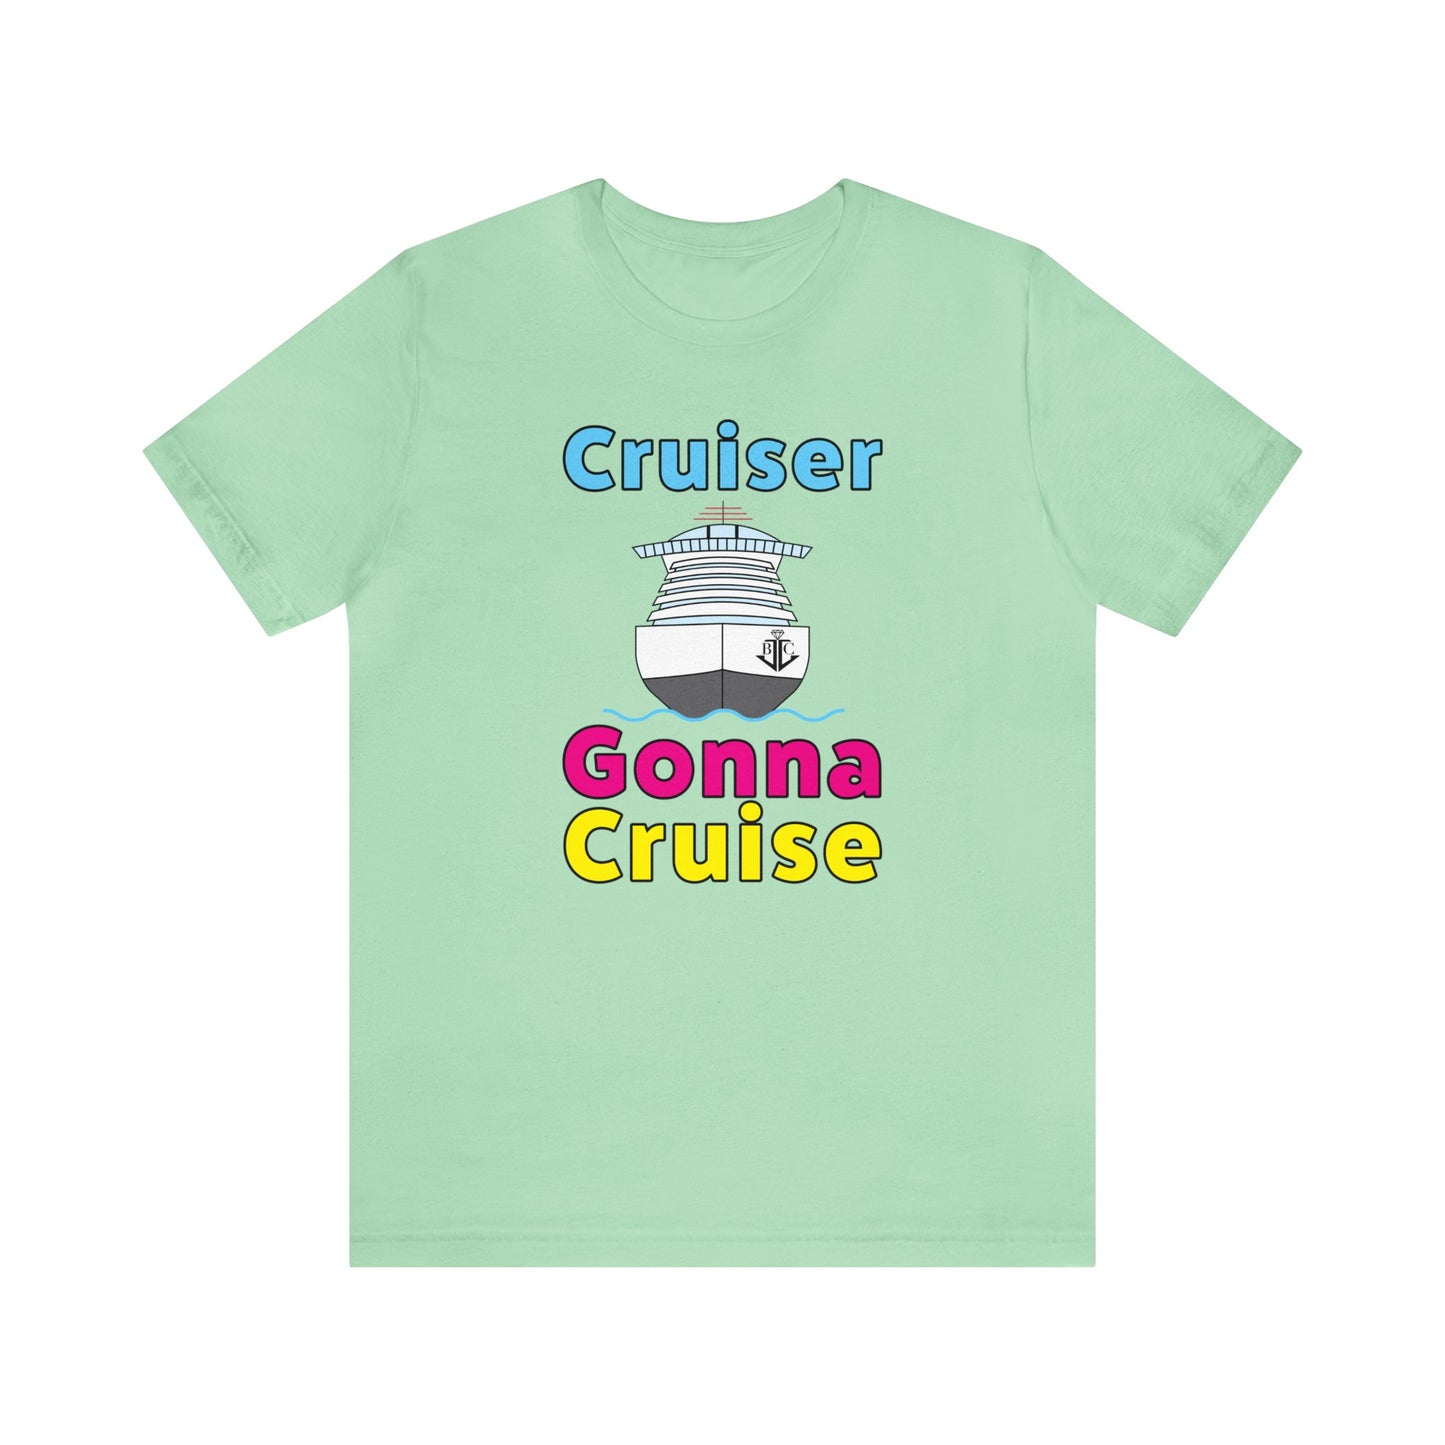 Cruiser Gonna Cruise–Unisex Lightweight Fashion Tee–EXPRESS DELIVERY*